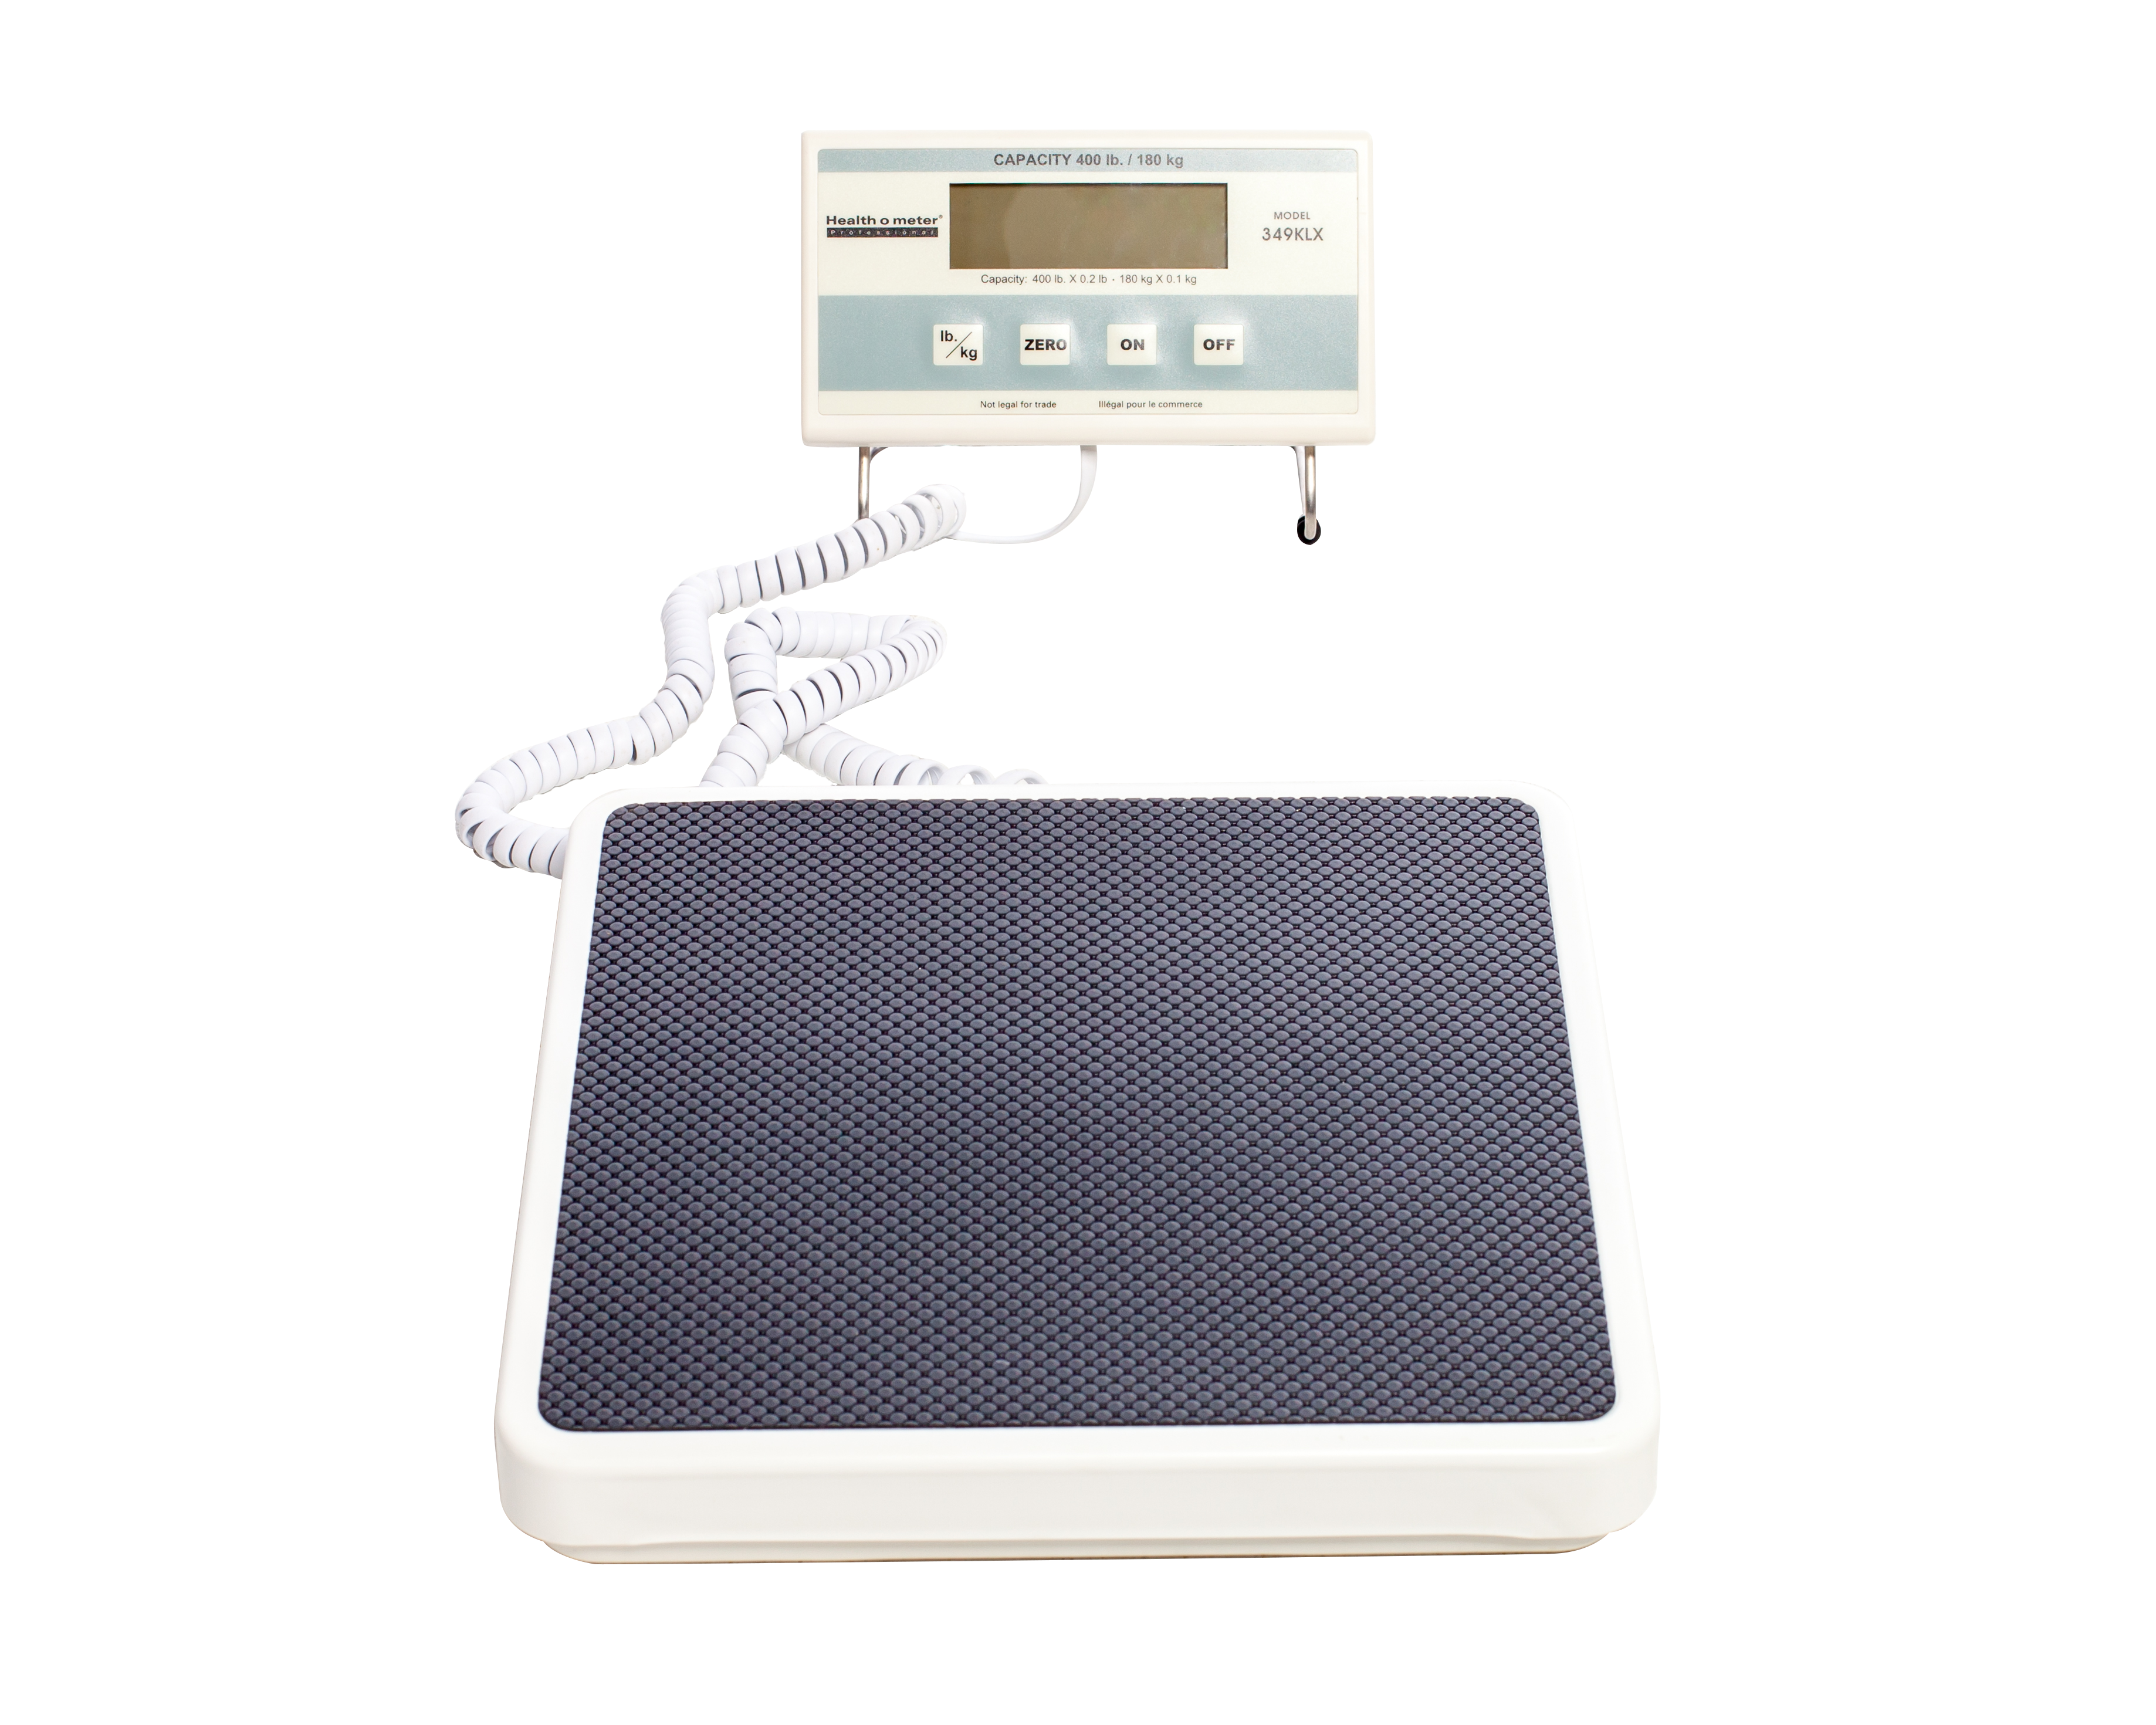 Scale Floor Scale Health O Meter® Digital LCD Di .. .  .  